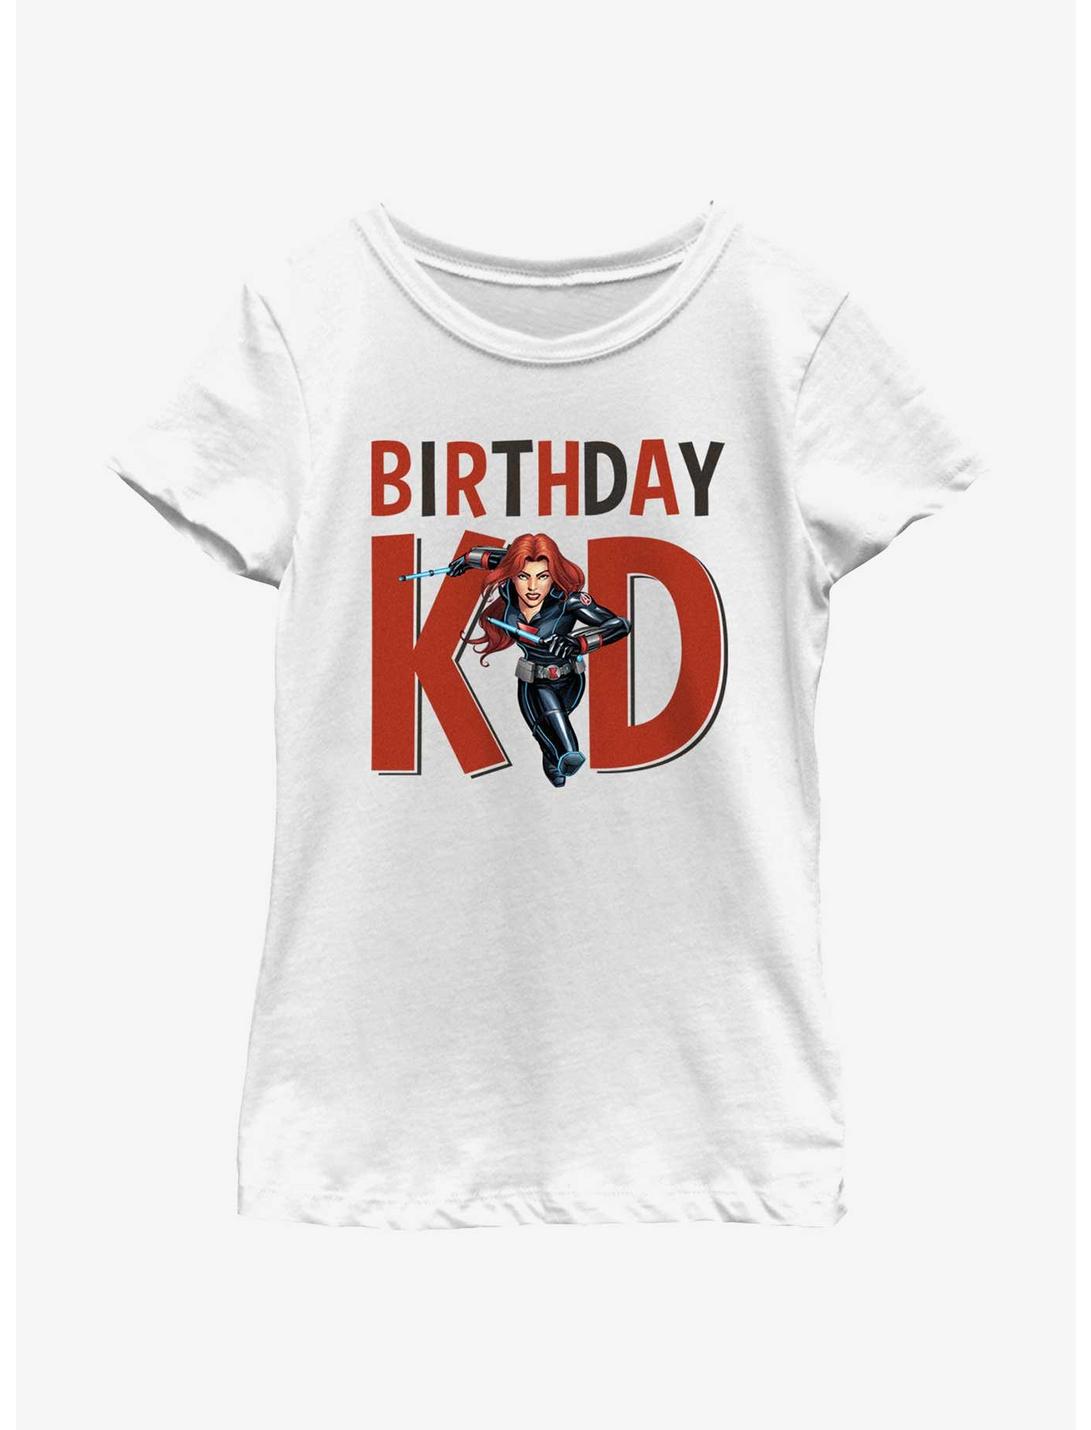 Marvel Avengers Birthday Kid Black Widow Youth Girls T-Shirt, WHITE, hi-res